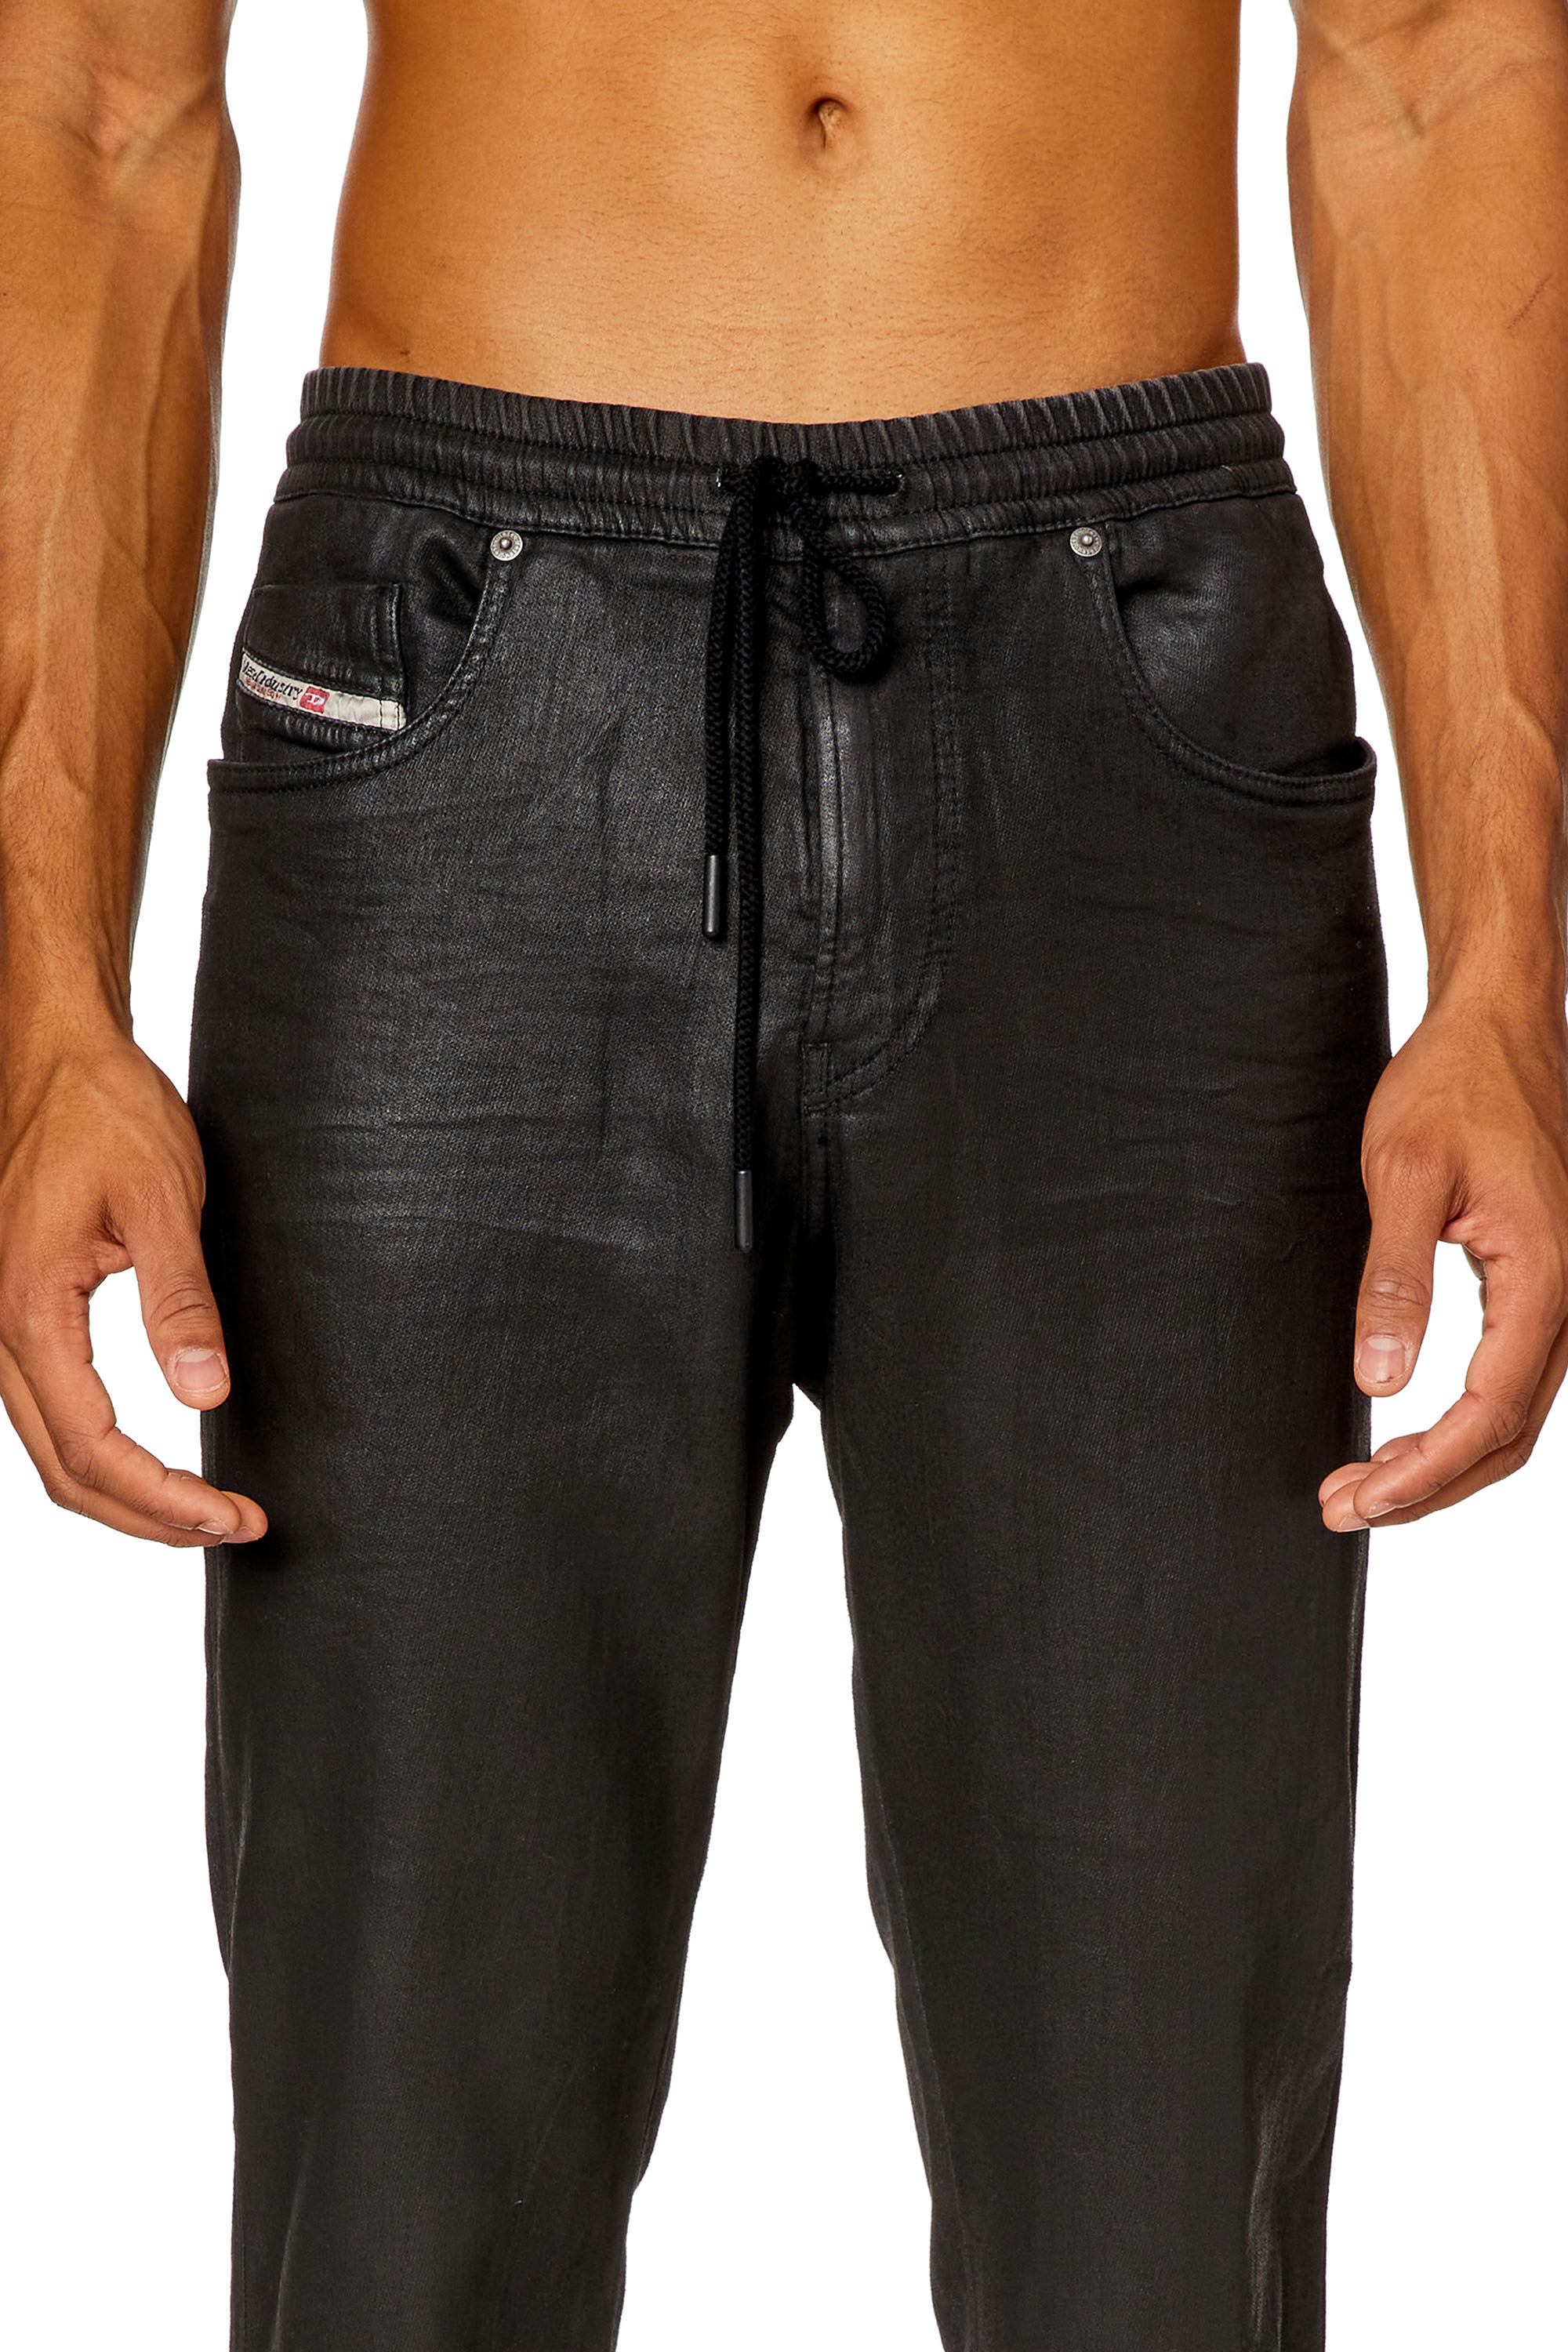 Men's Slim Jeans | Black/Dark grey | Diesel 2060 D-Strukt Joggjeans®